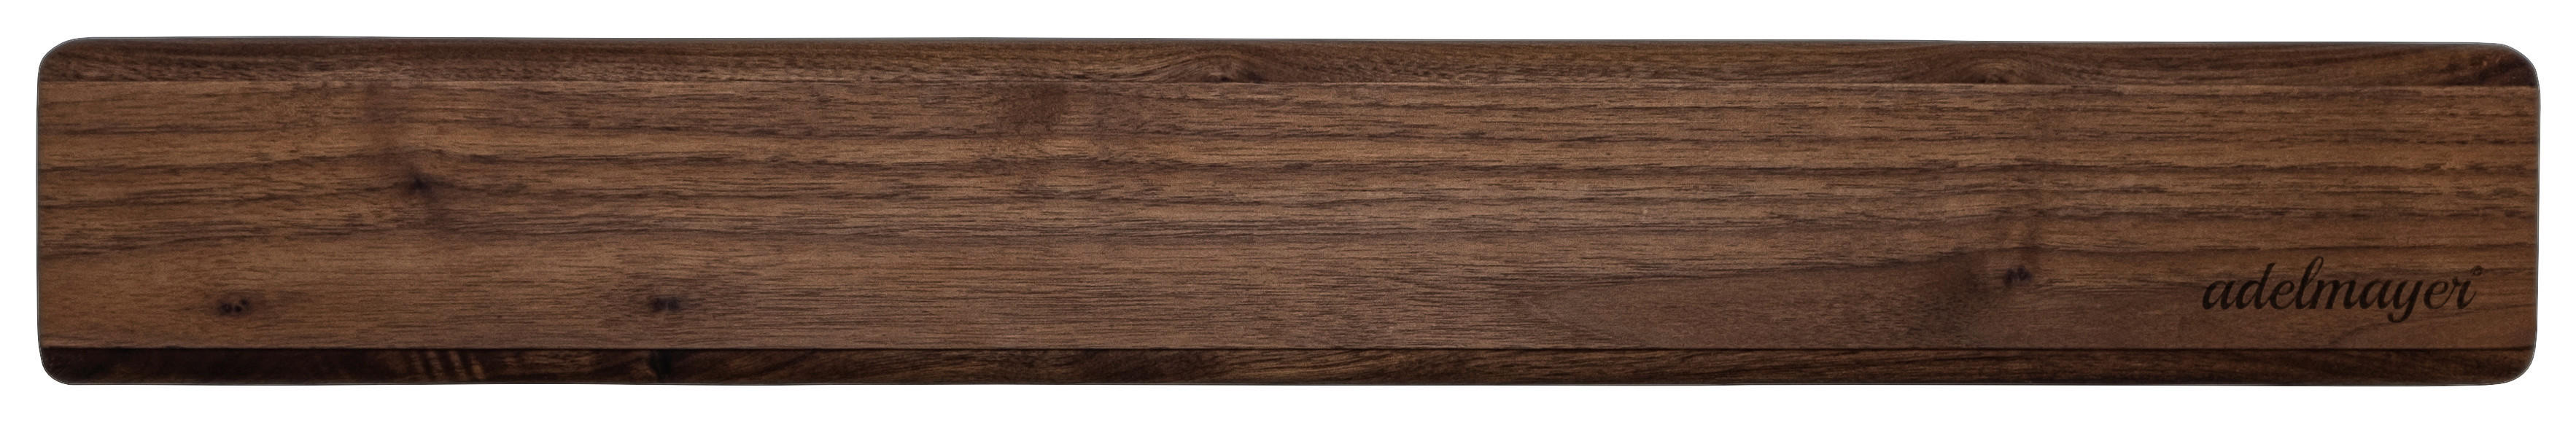 MAGNETLEISTE 40/7/3,5 cm  - Braun, Basics, Holz (40/7/3,5cm) - Adelmayer